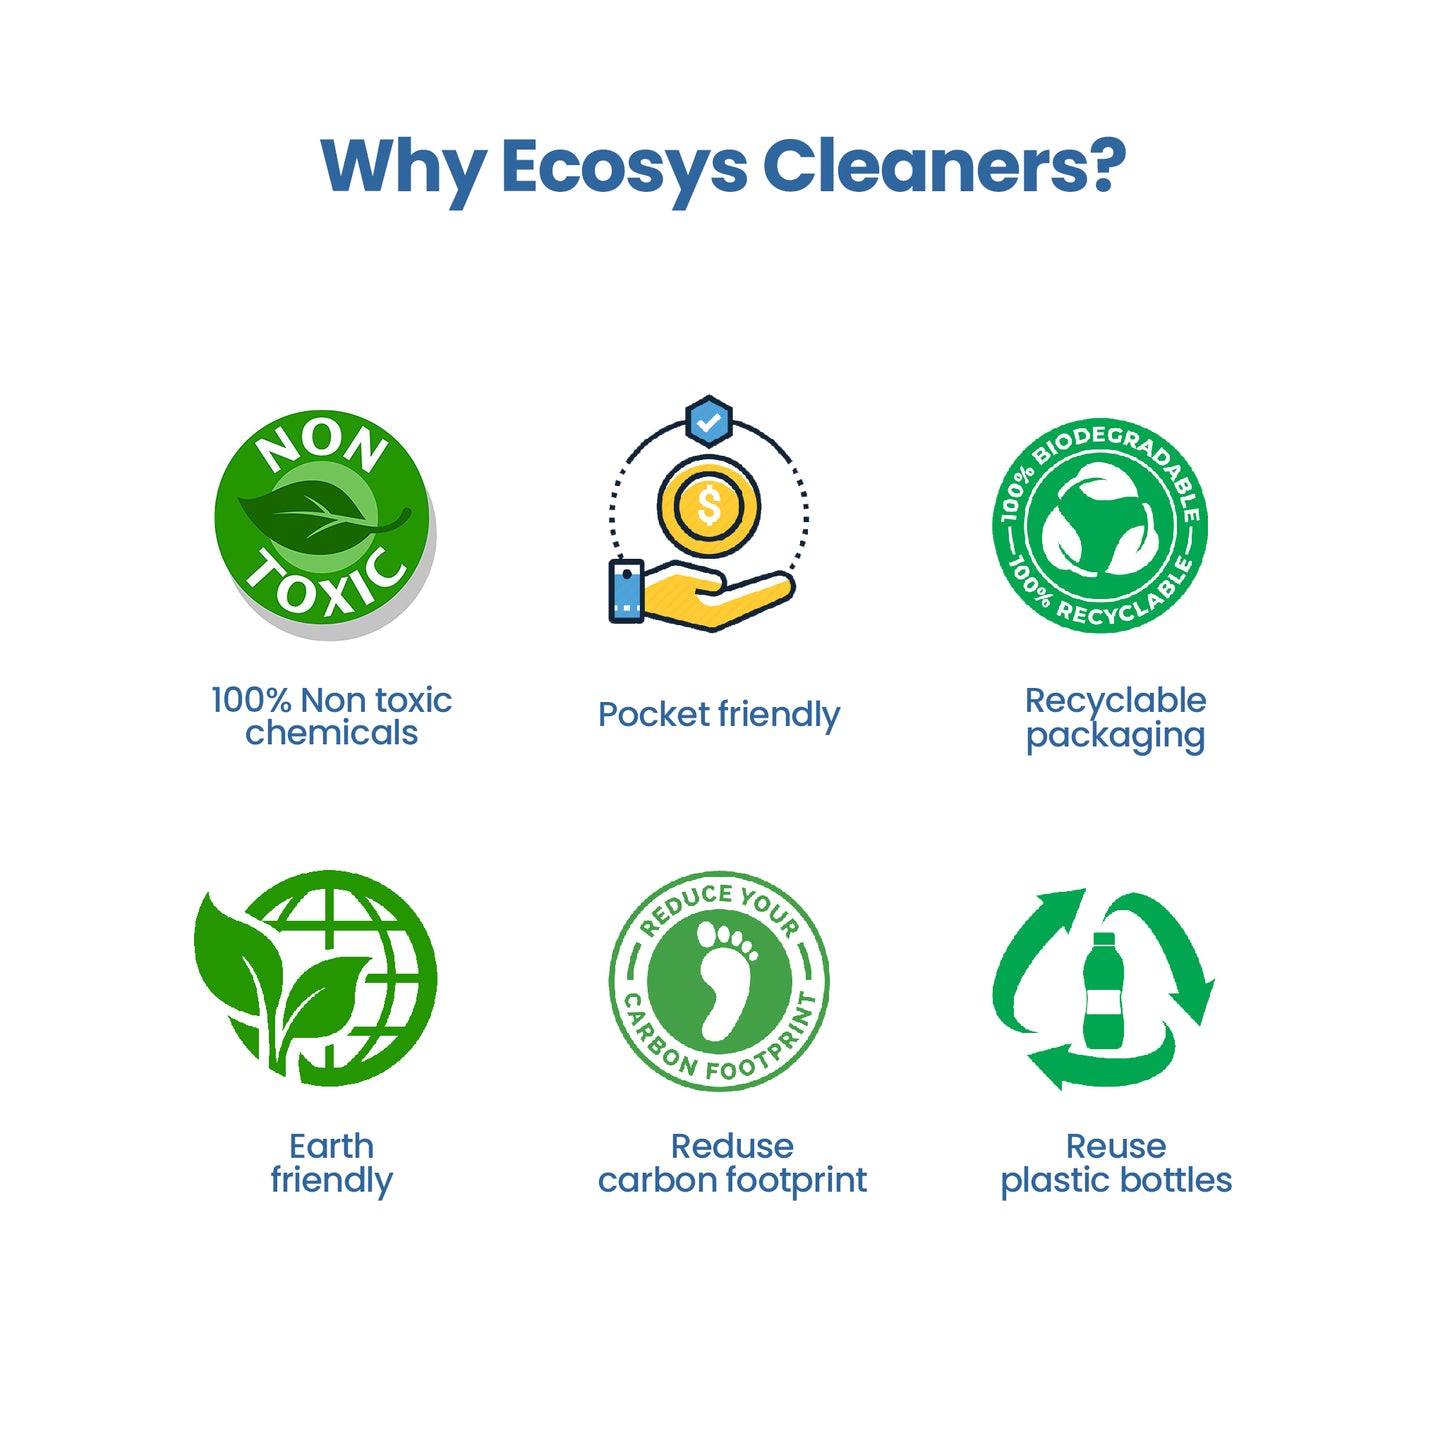 Ecosys Air Freshener (Sea Myst) | Long lasting | Non Toxic